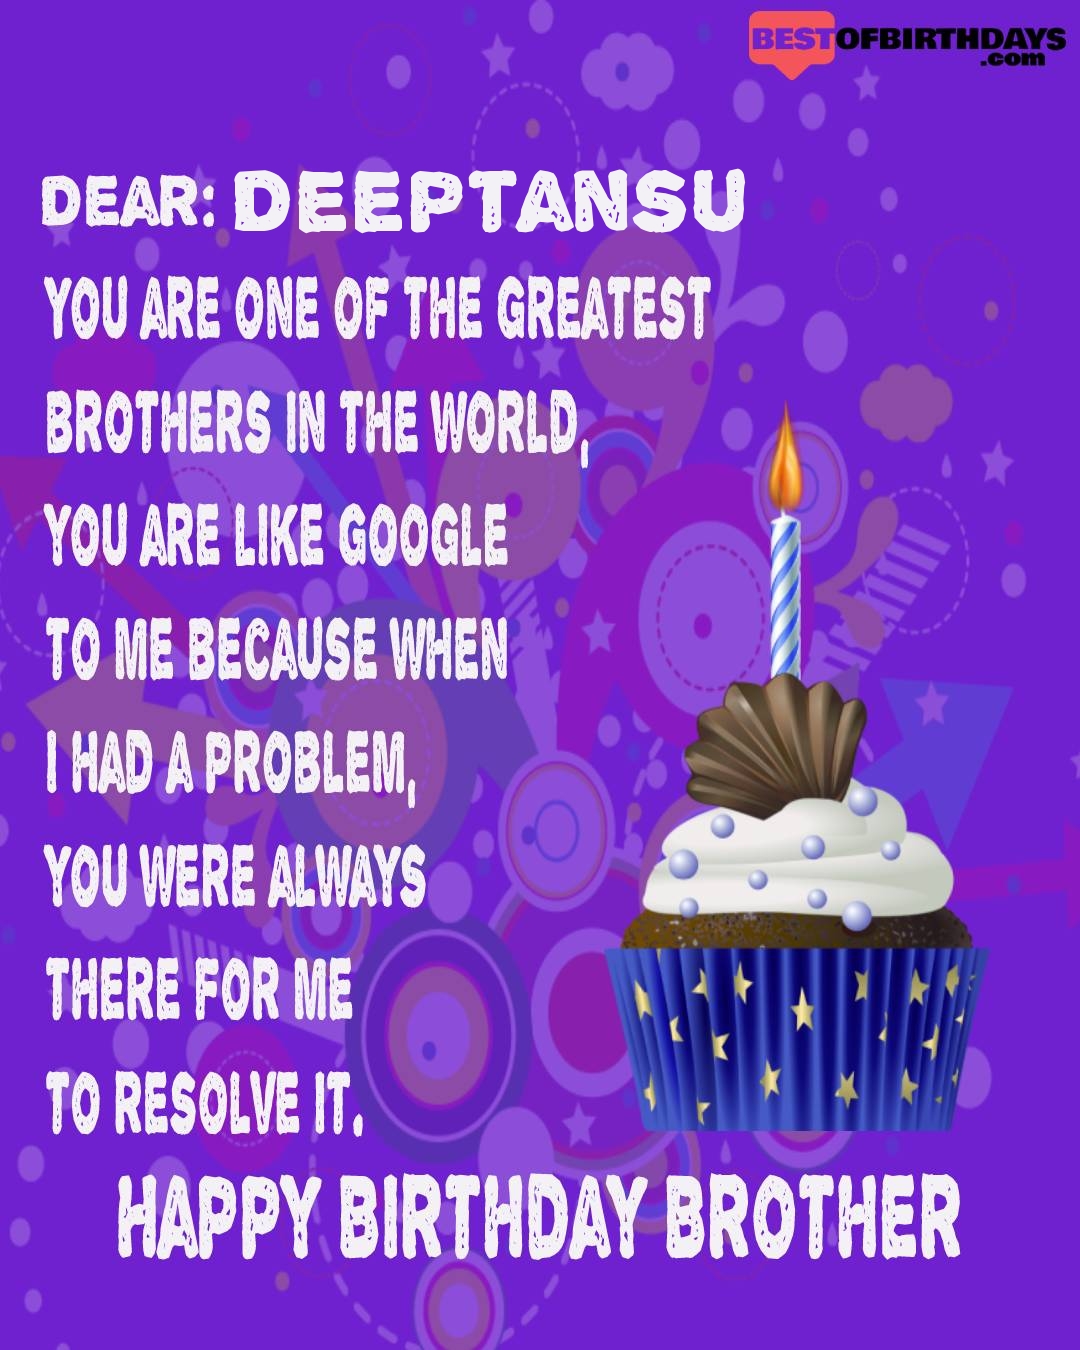 Happy birthday deeptansu bhai brother bro